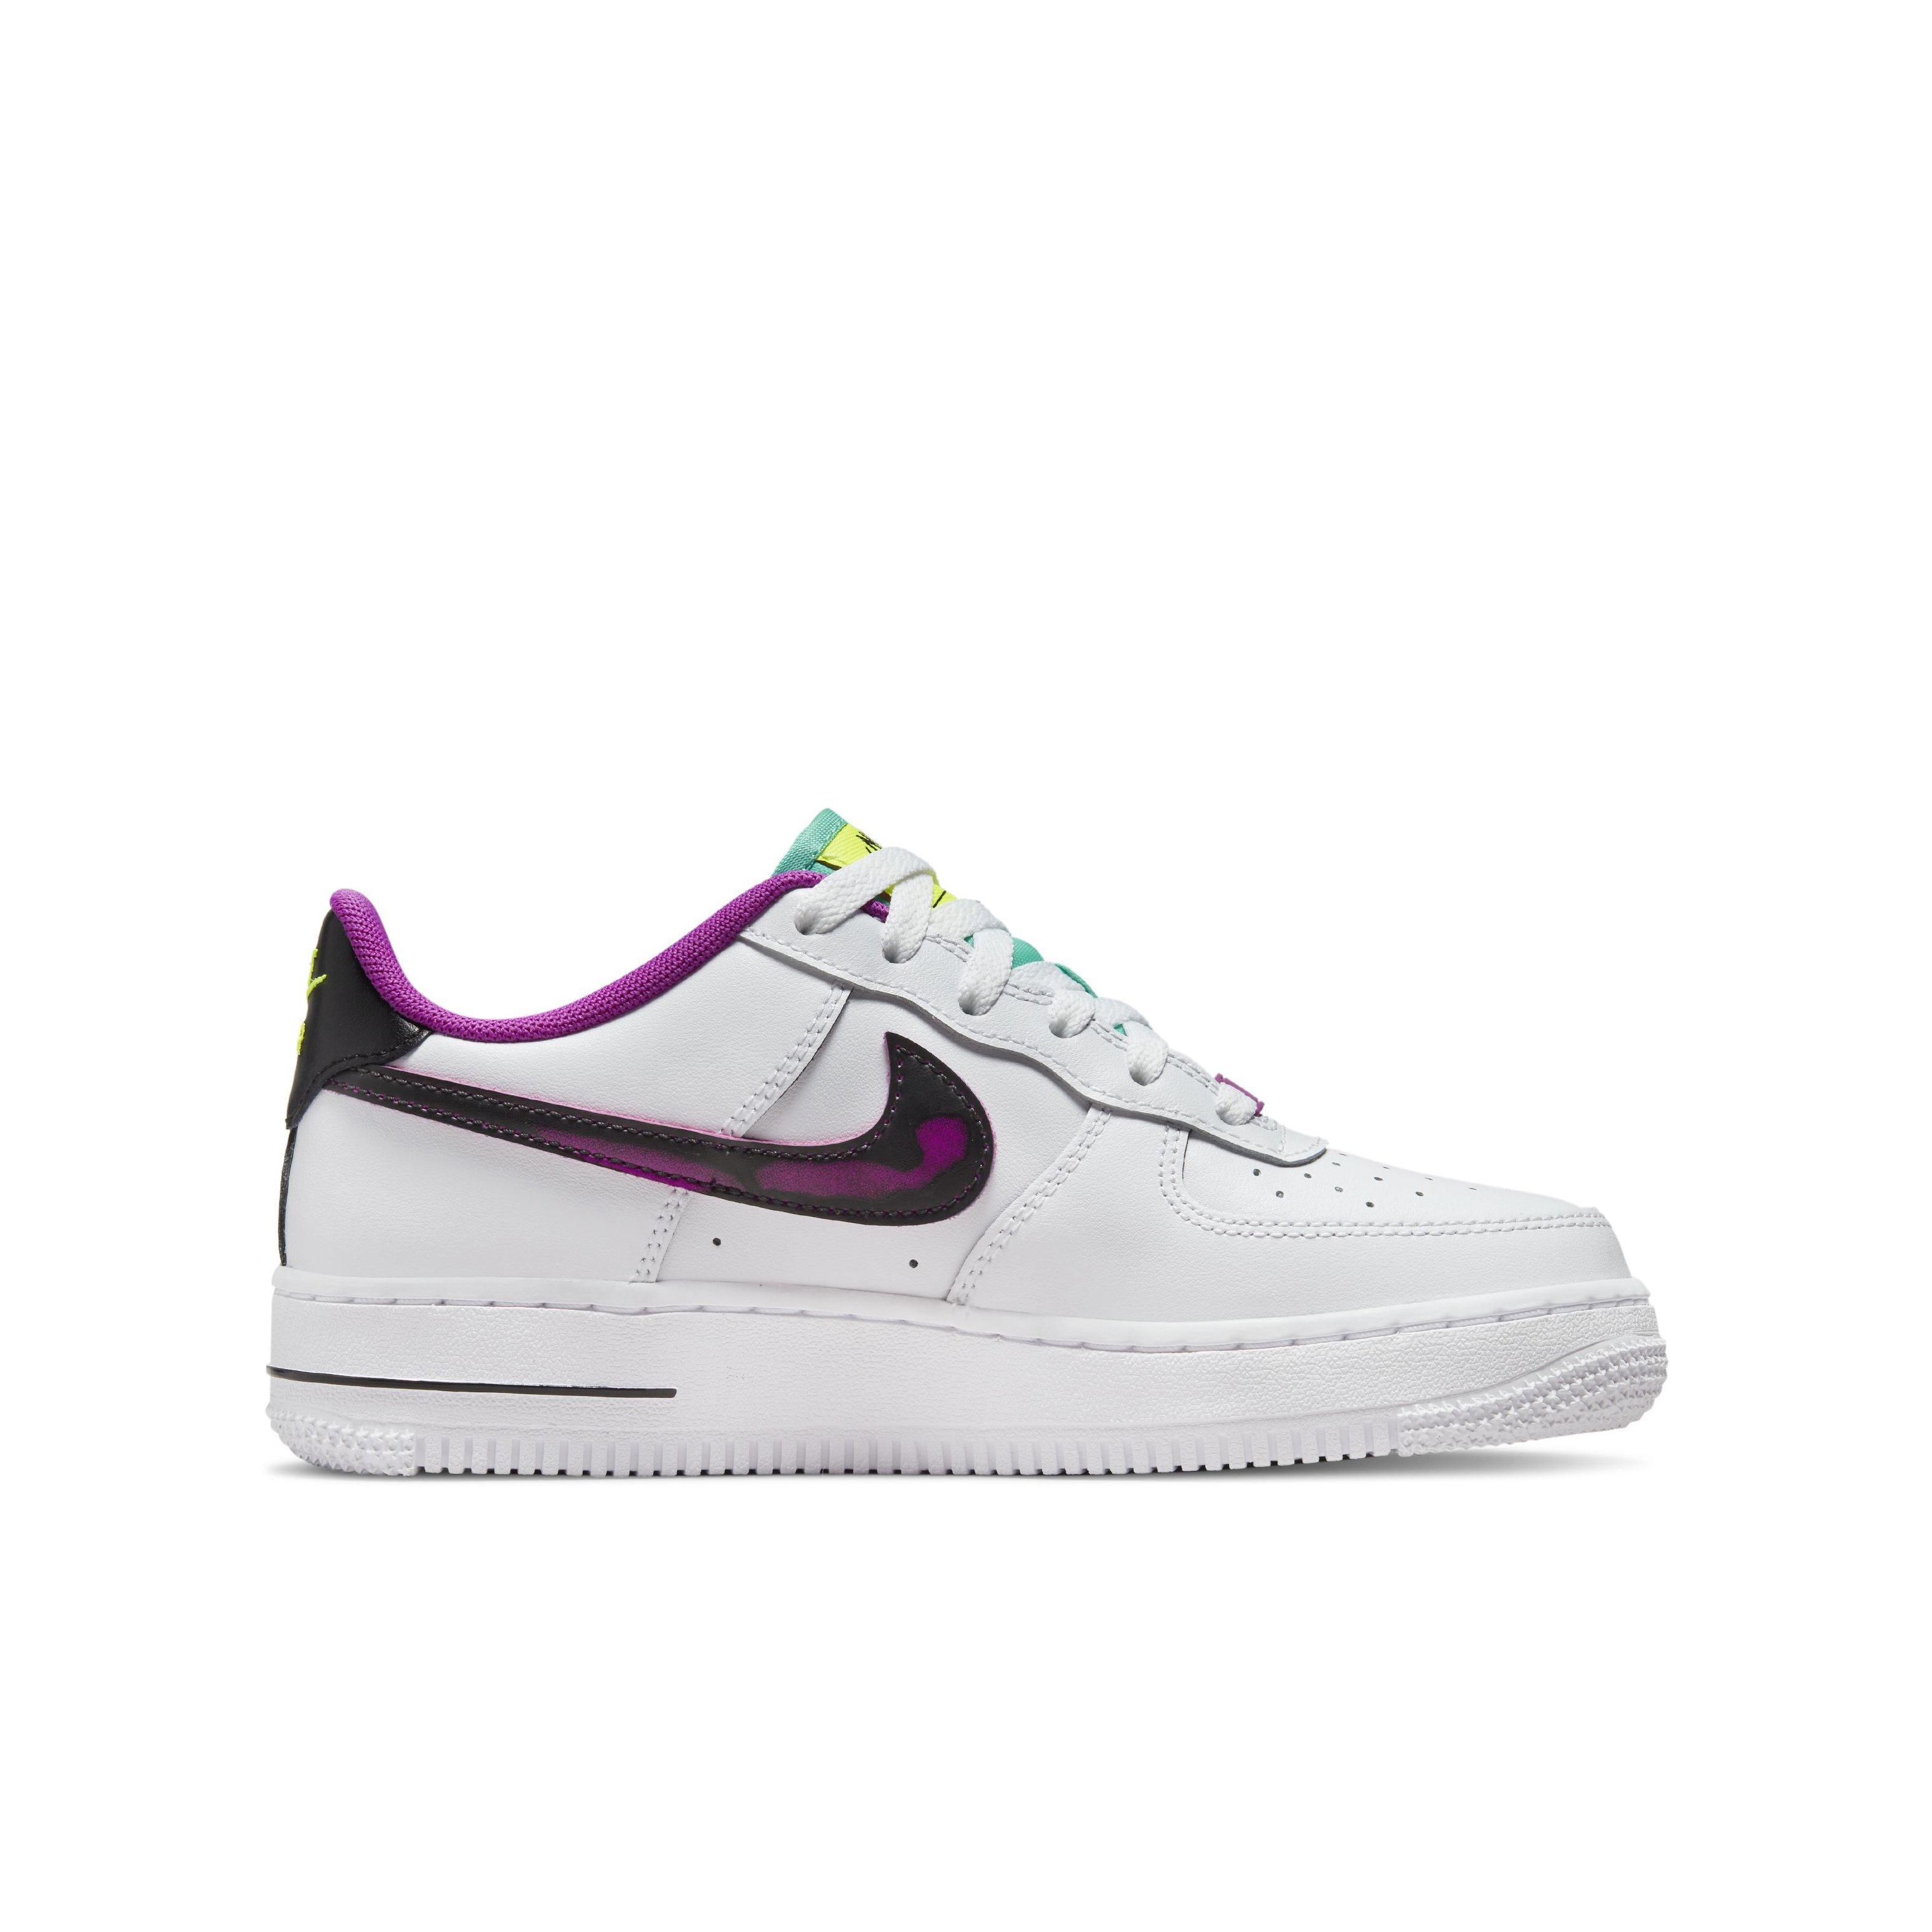 Nike Air Force 1 High “Hoops” Appears in Black and Purple